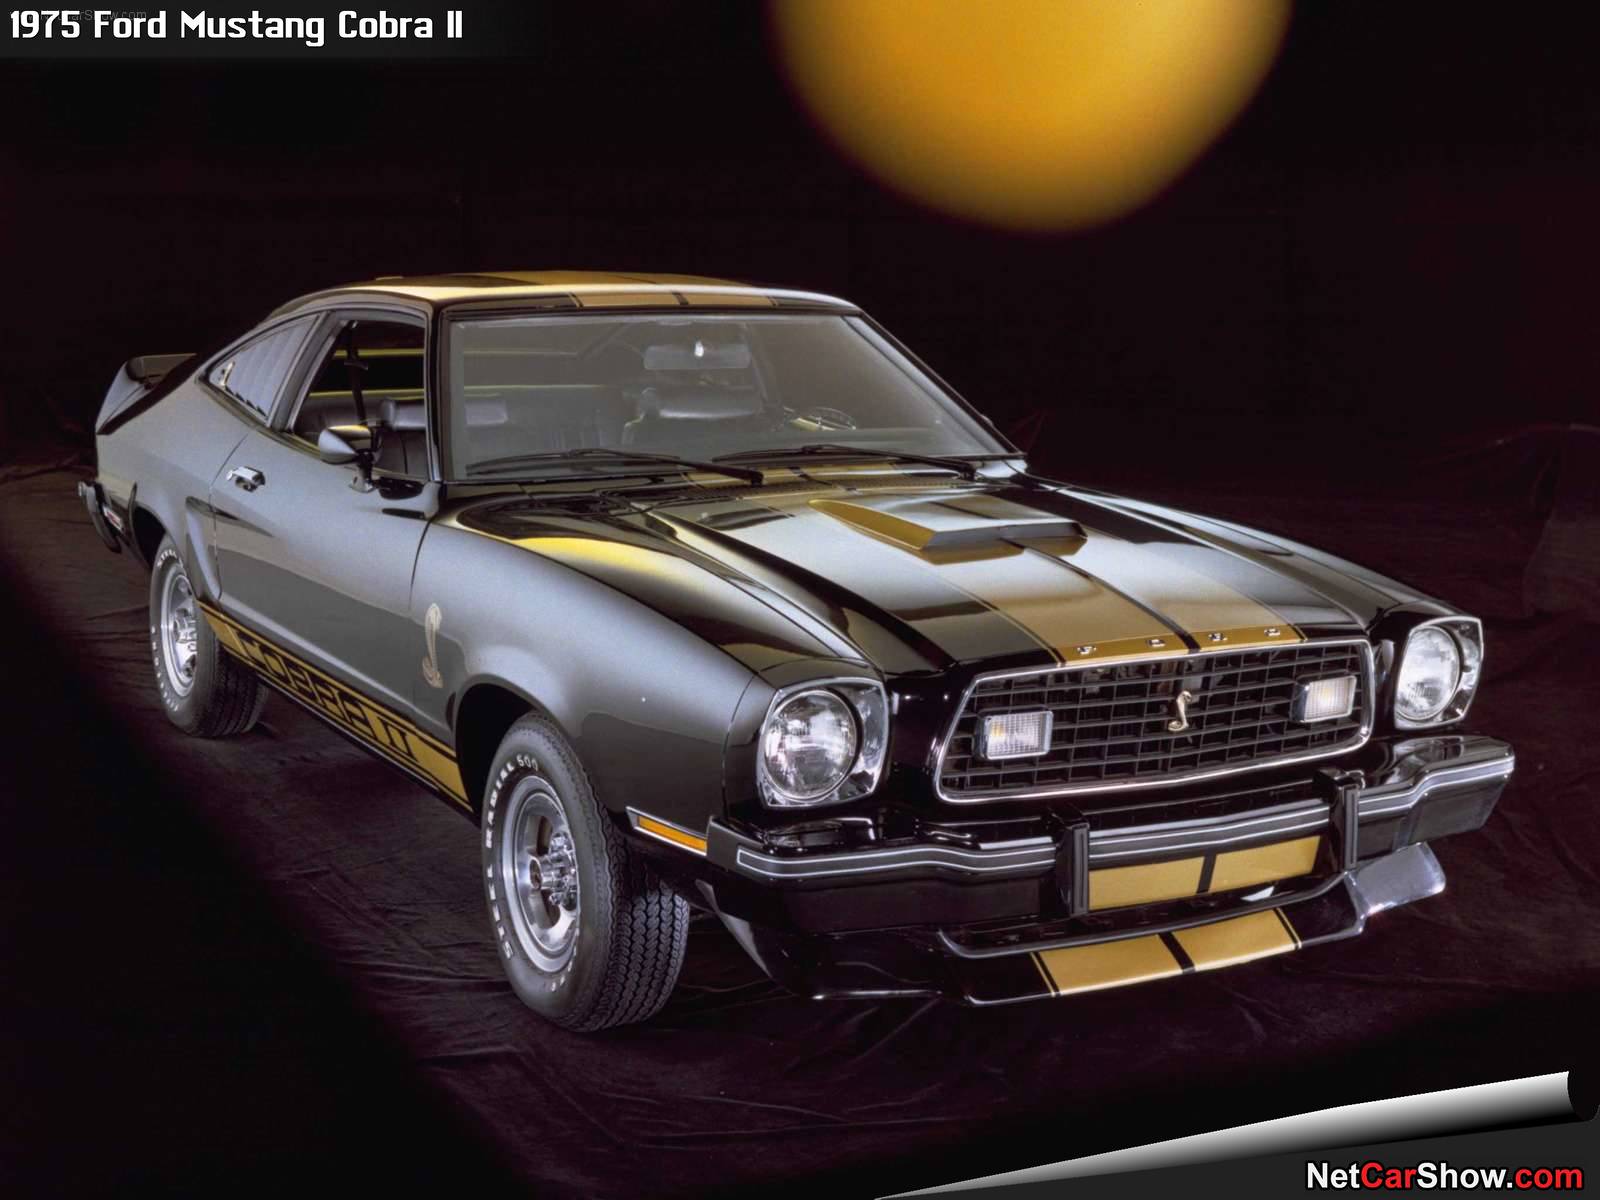 Ford-Mustang_Cobra_II-1975-wallpaper.jpg